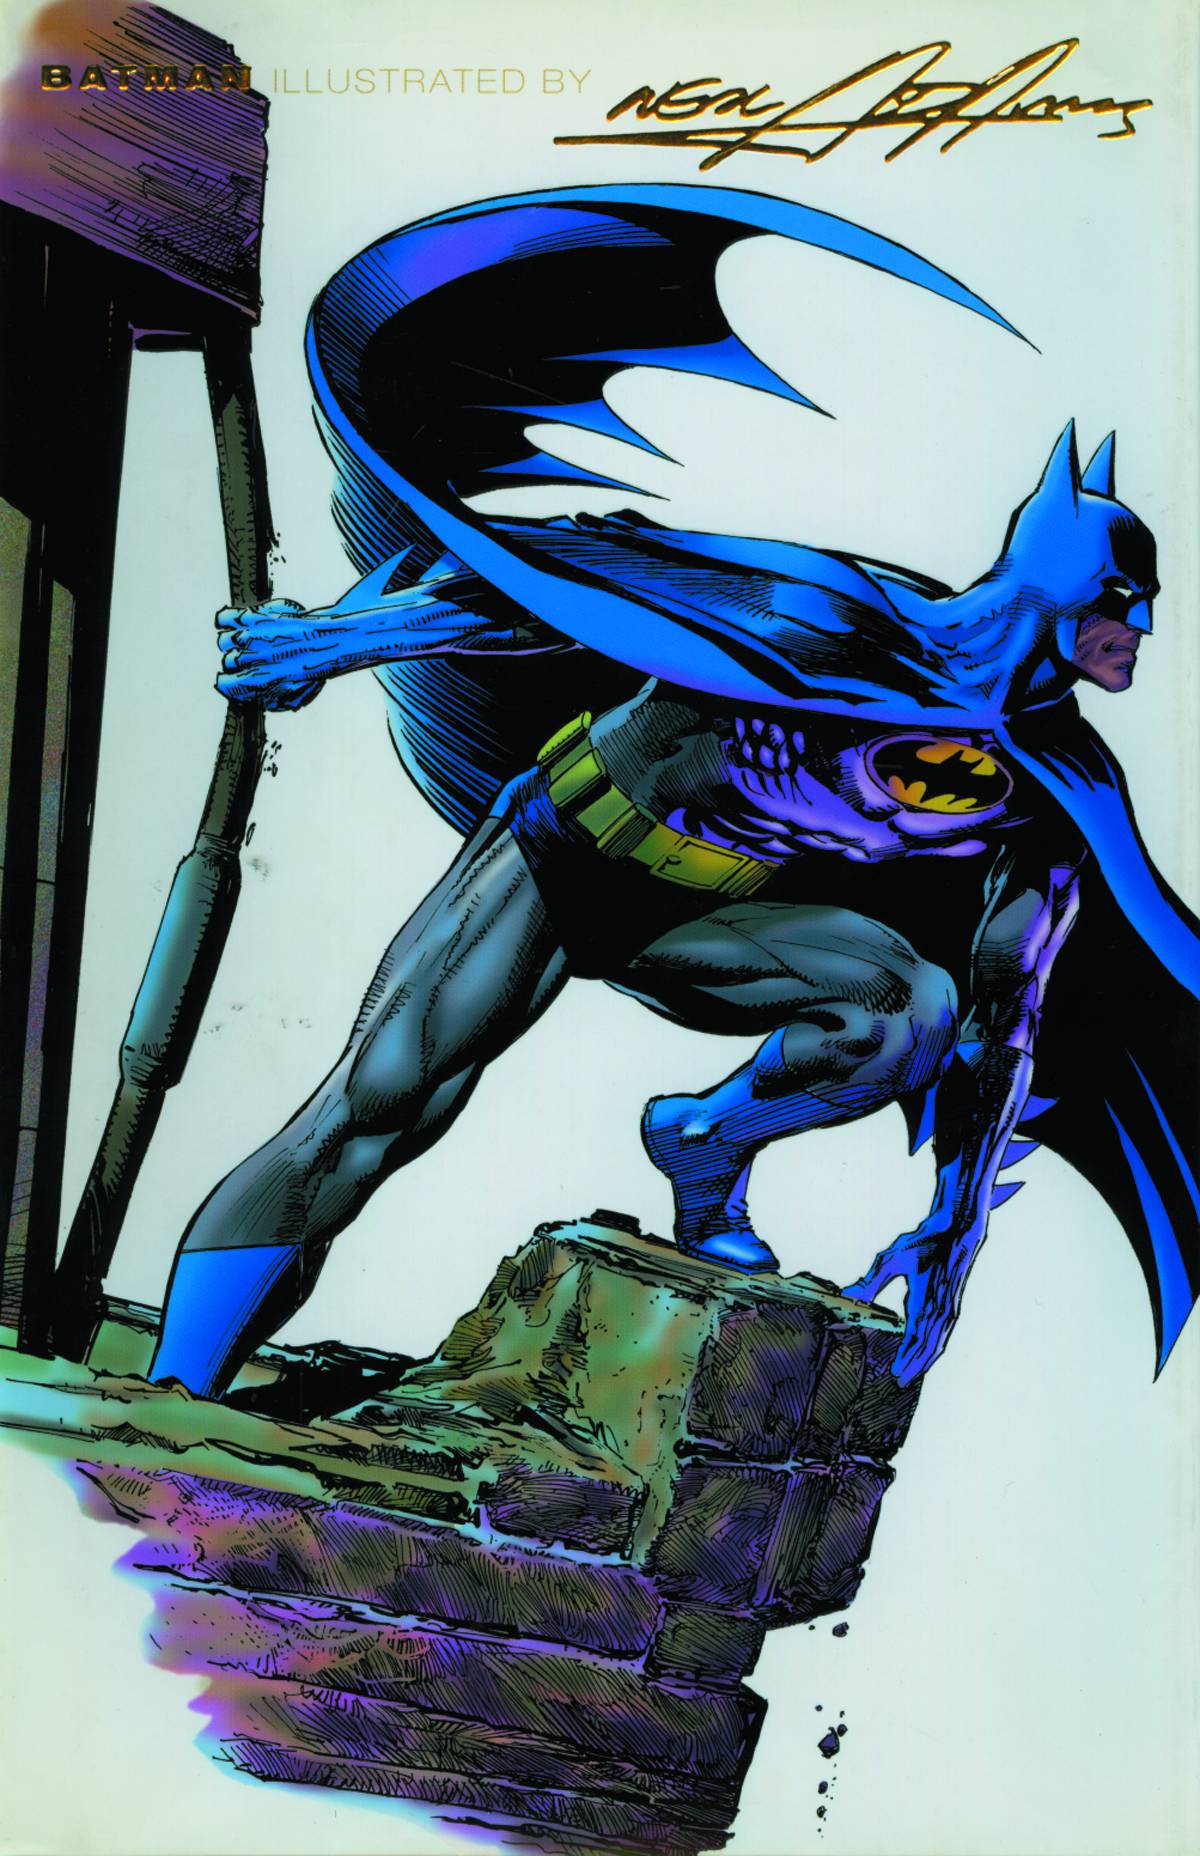 Batman Illustrated by Neal Adams Graphic Novel Volume 3